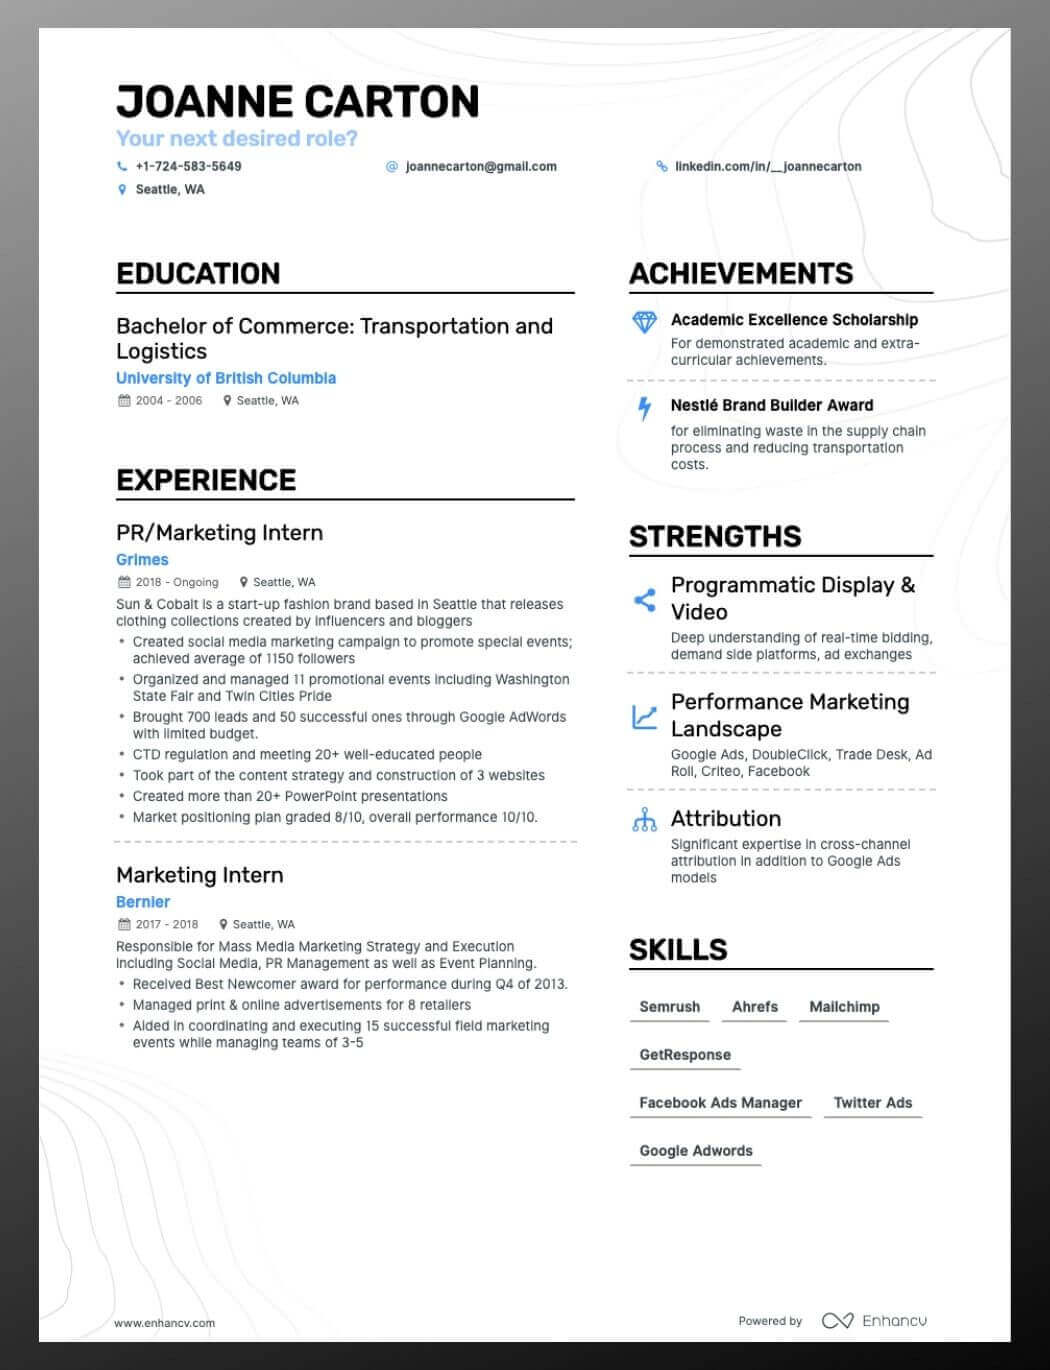 Enhancv Everything You Need to Know: Functional Skills Based Resume 